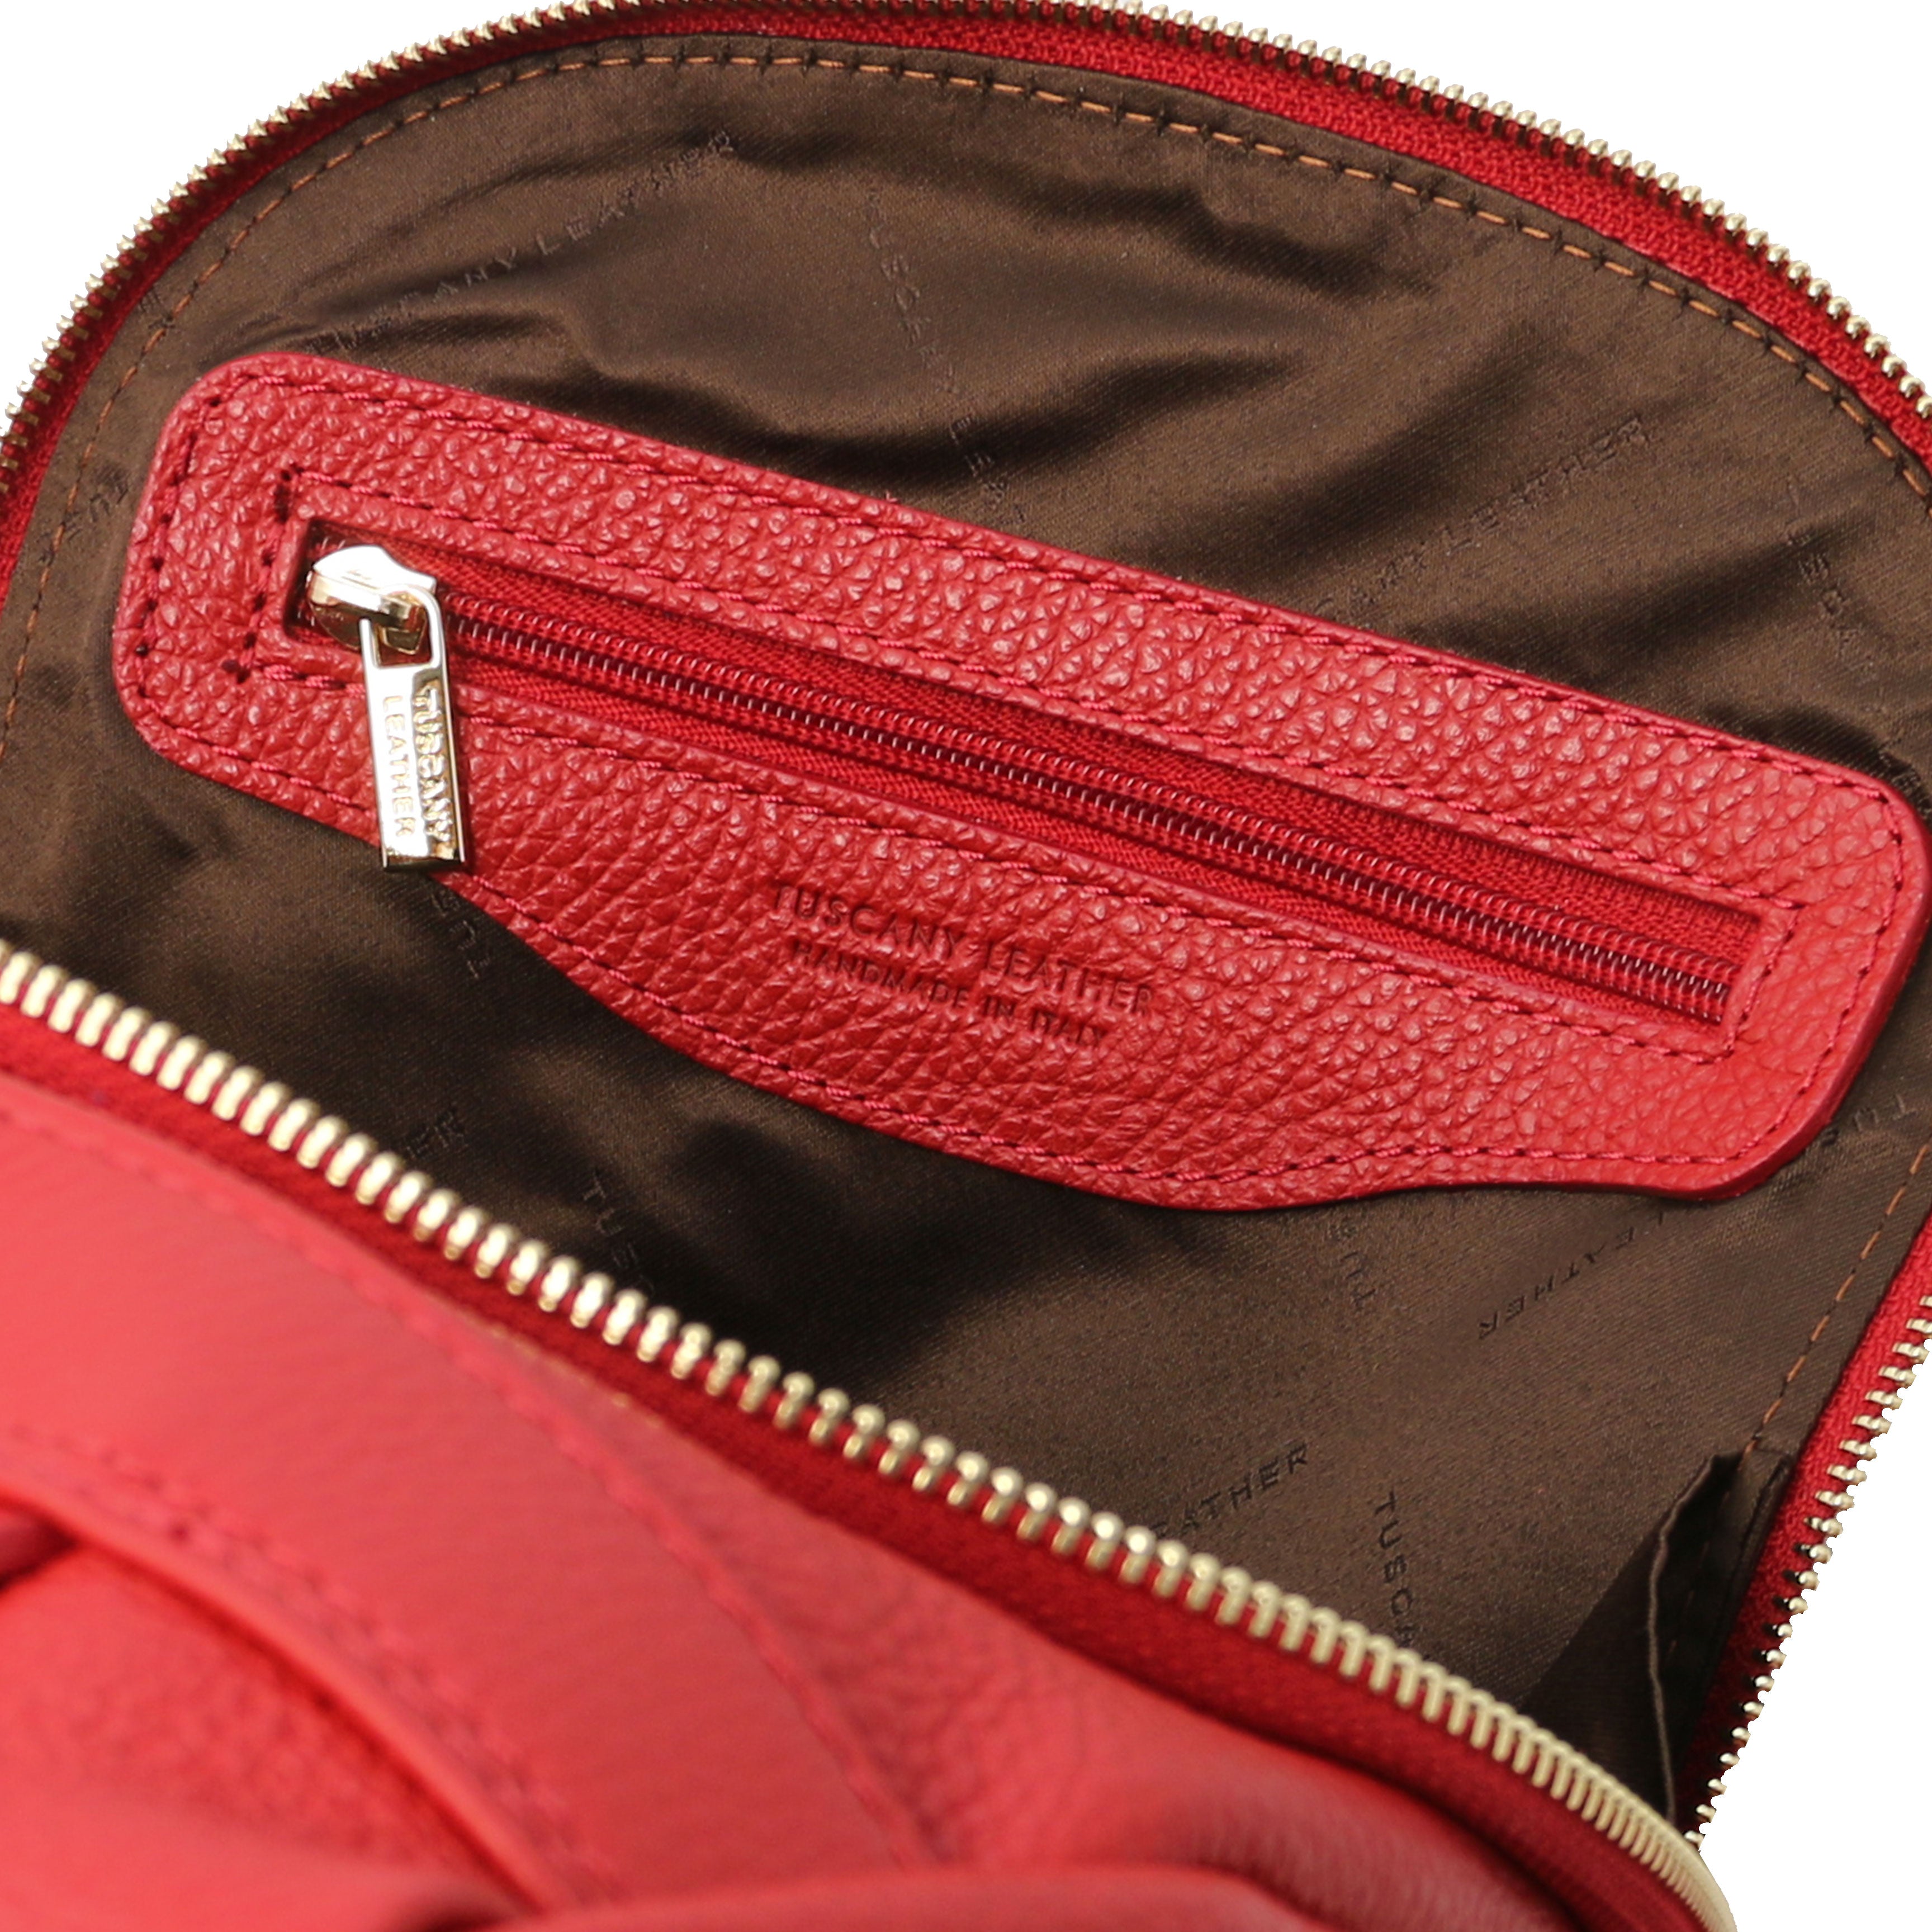 Tuscany Leather rugtas zacht leer TL Bag rood binnenkant tas